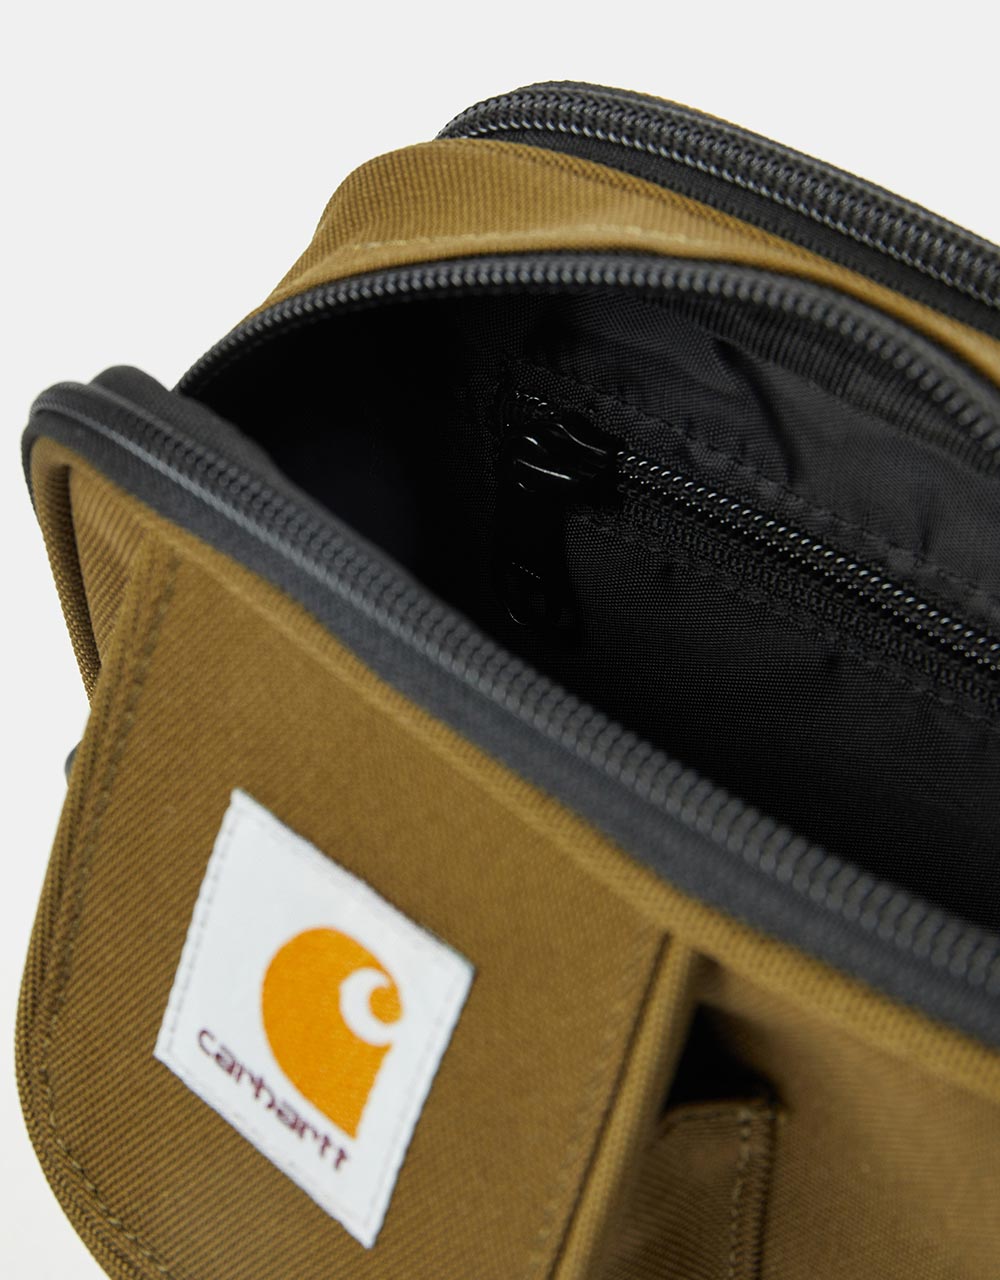 Carhartt WIP Essentials Bag, Small - Highland